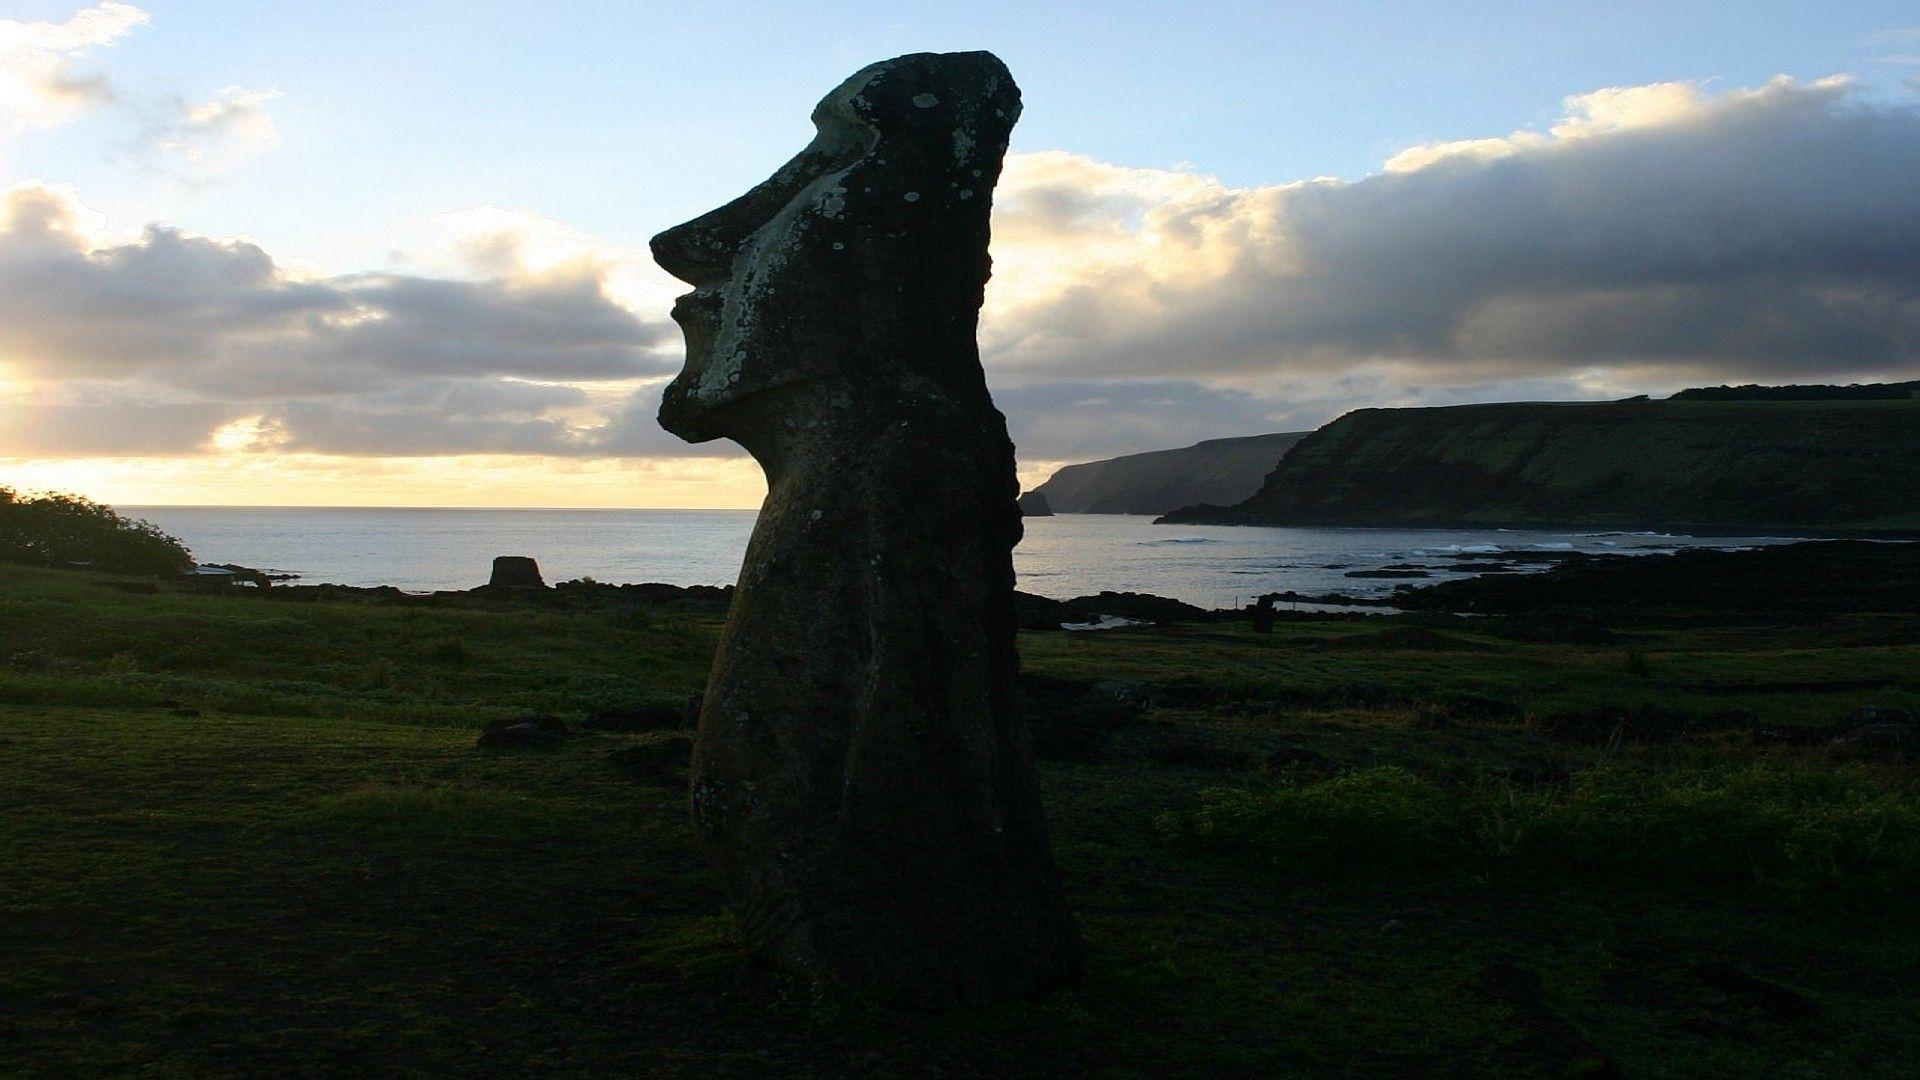 Moai Statues On Easter Island